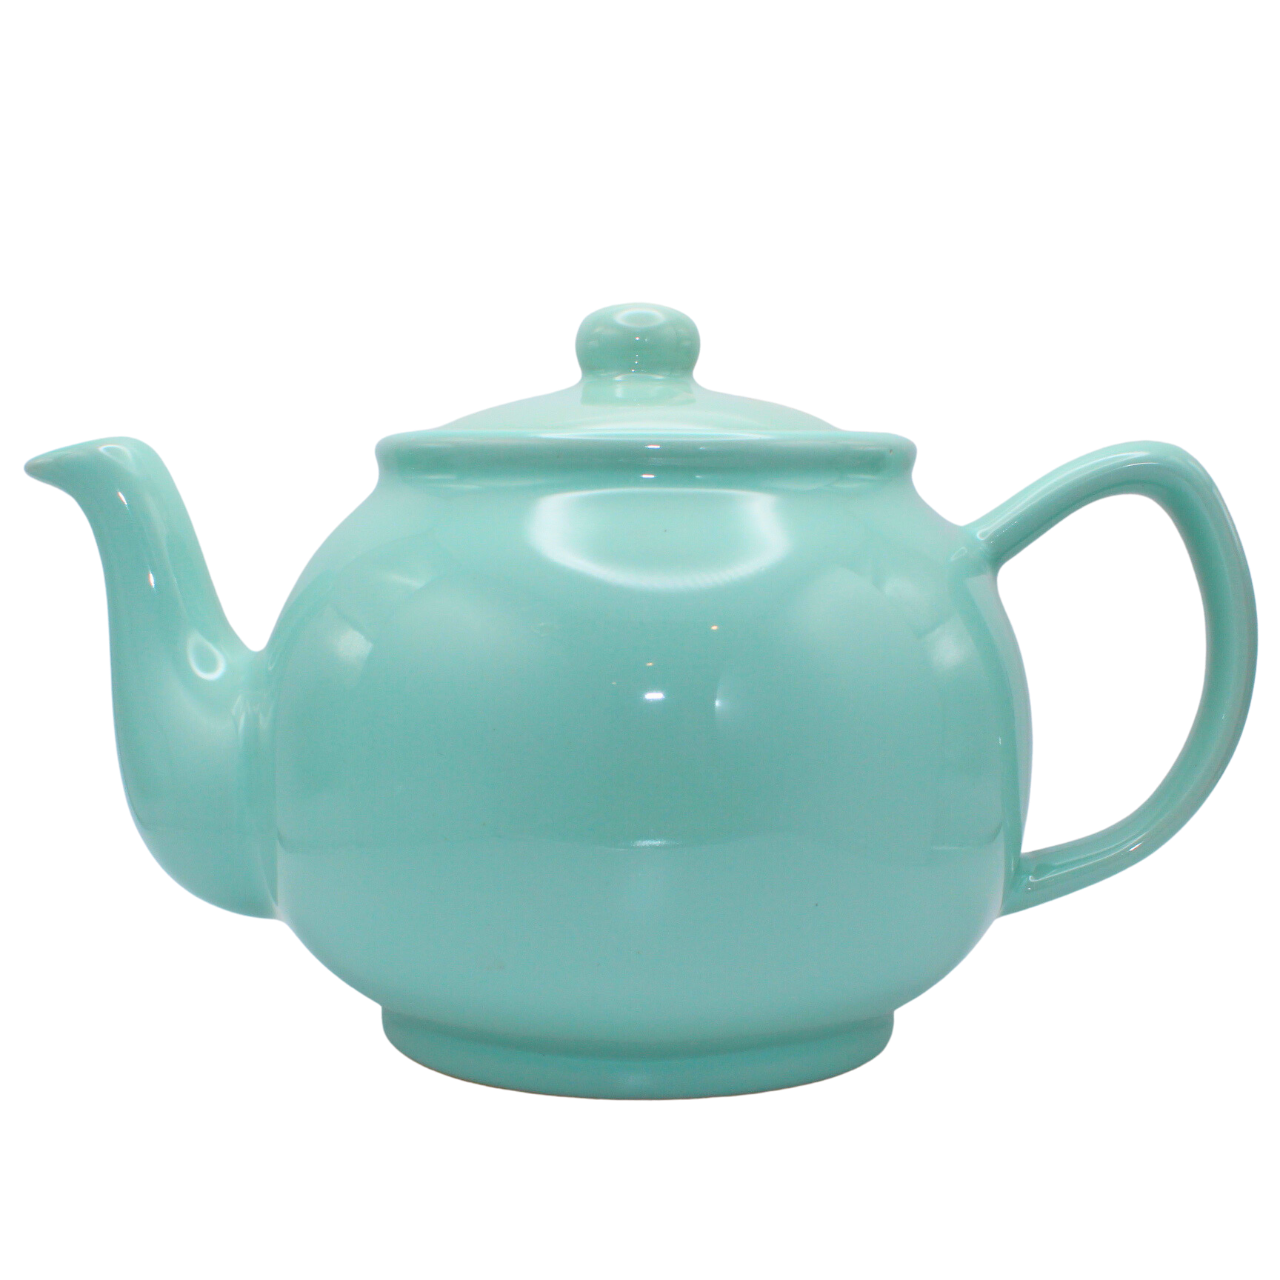 Classic Teapot